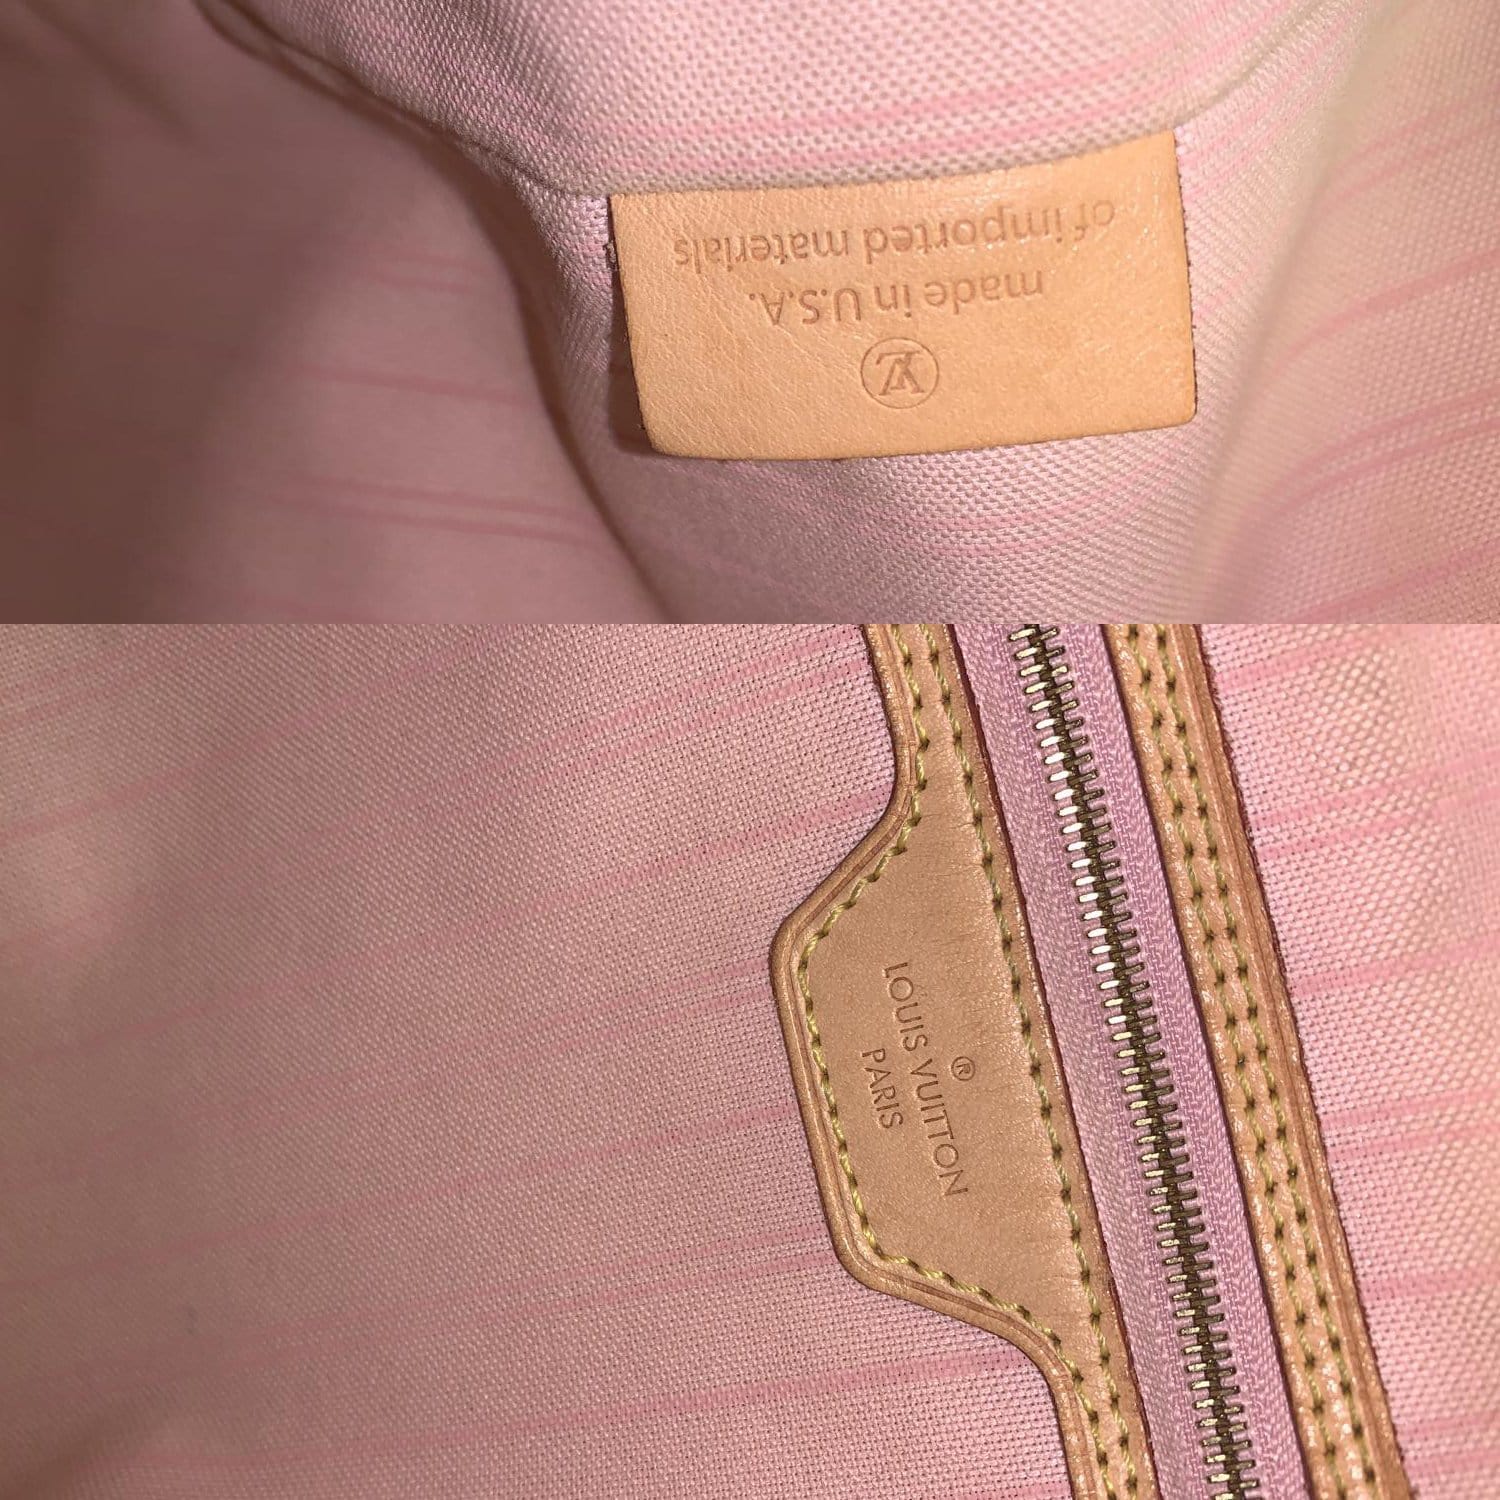 Louis Vuitton Damier Azur Delightful MM NM Bag - Yoogi's Closet